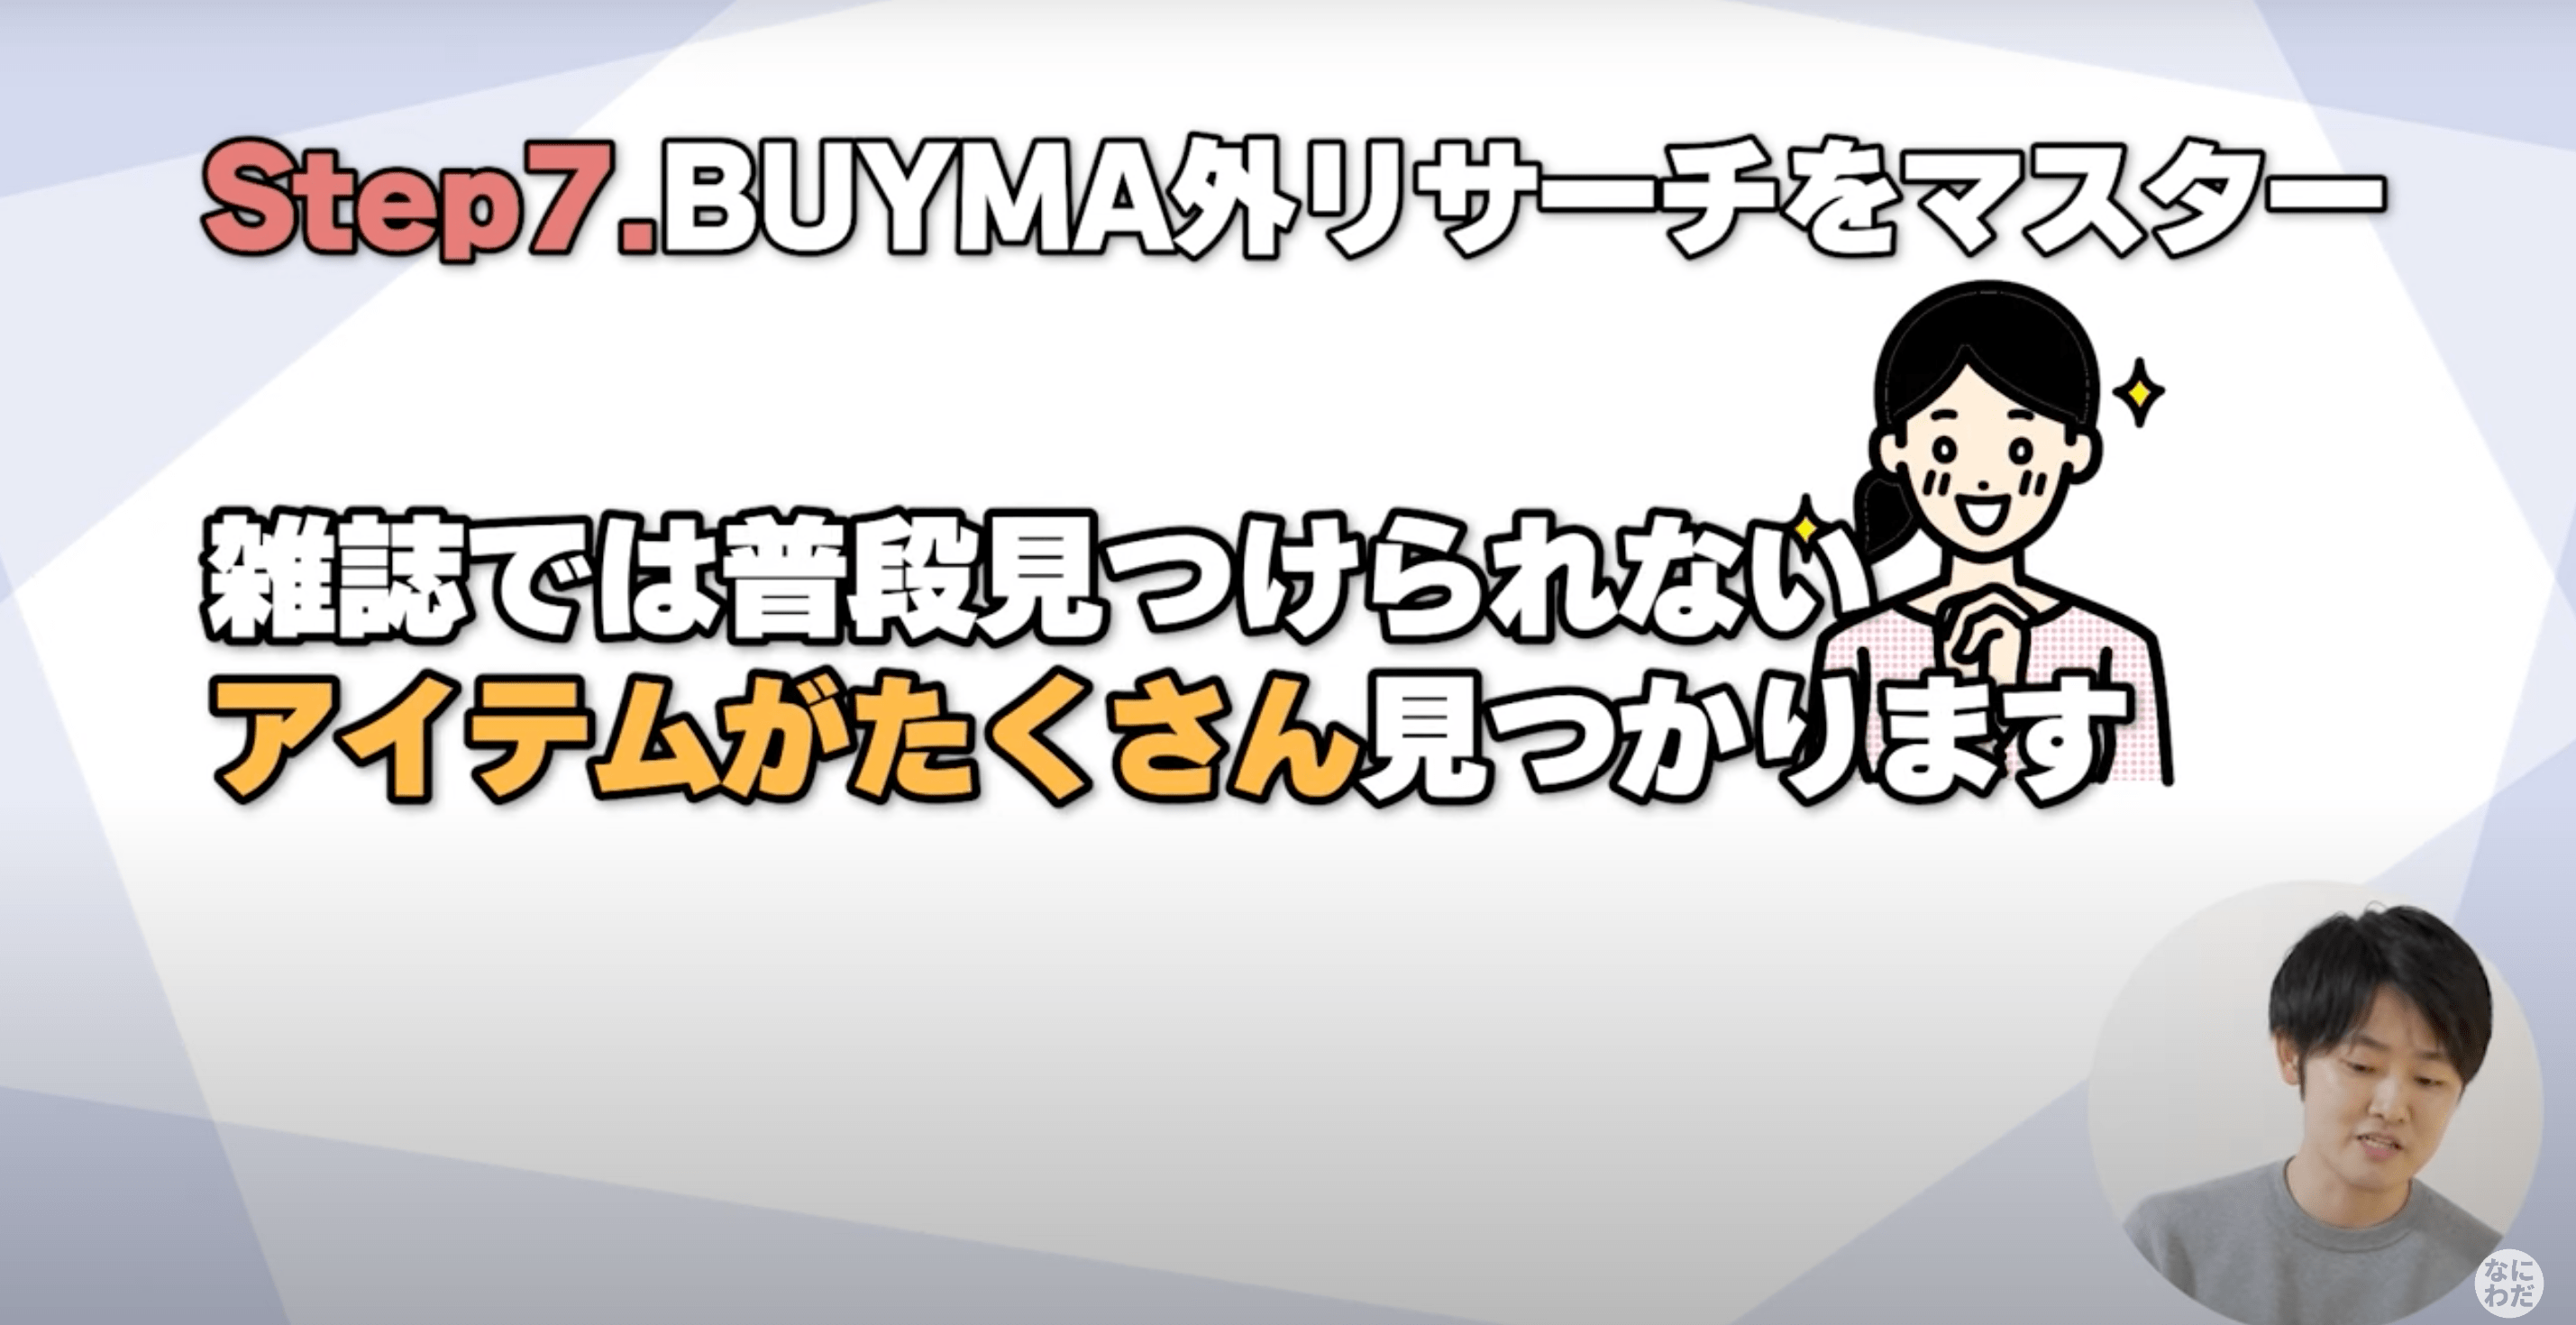 BUYMAで月収20万円達成する最新戦略を大公開！